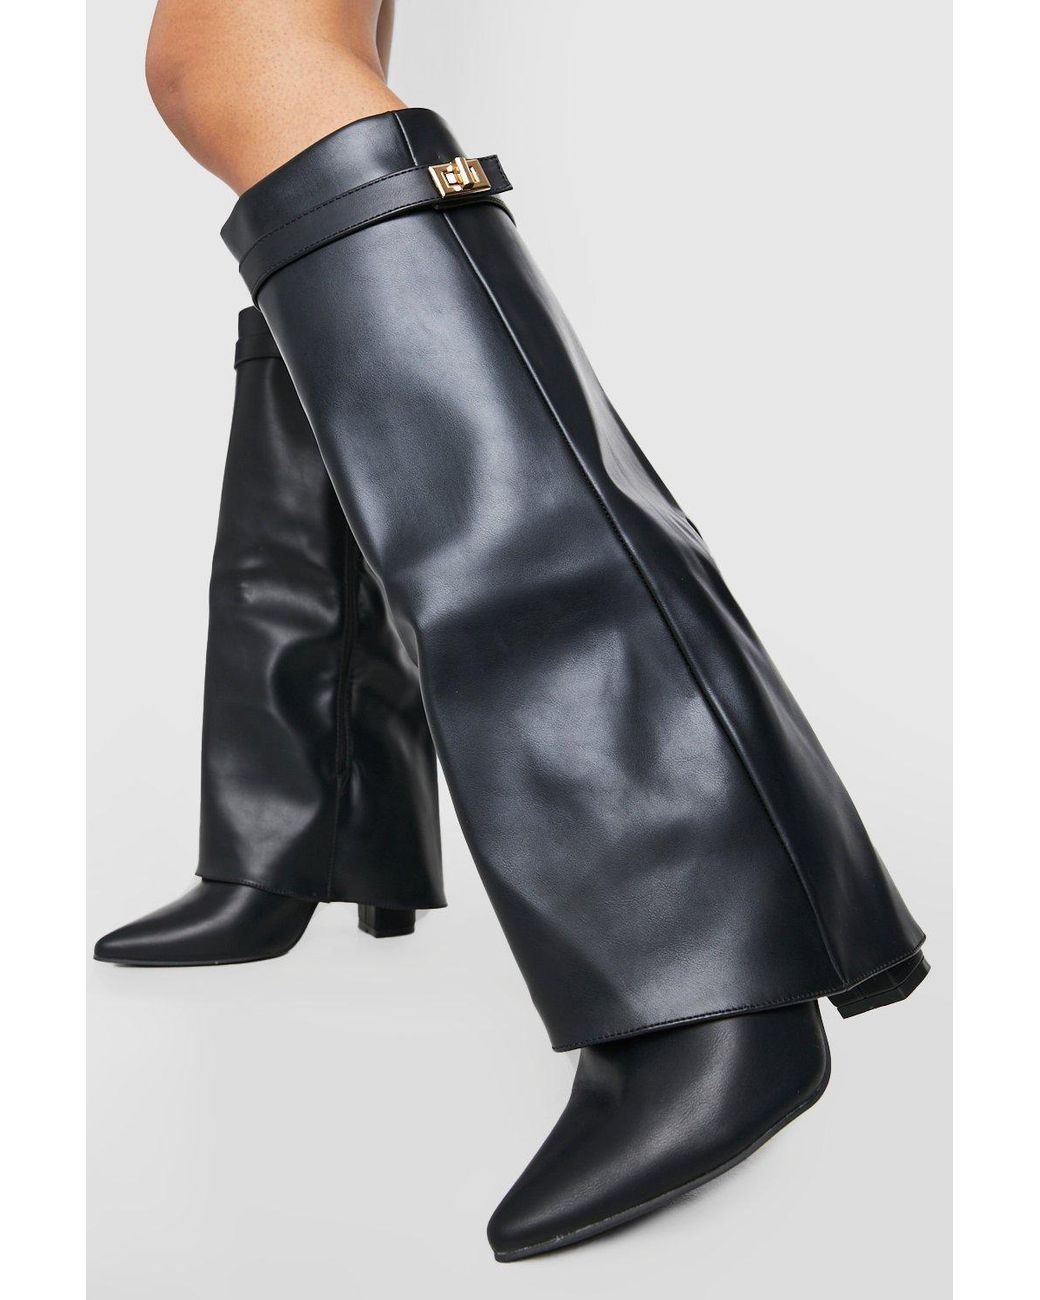 ask livestock Alert Boohoo Fold Over Metal Detail Knee High Boots in Black | Lyst